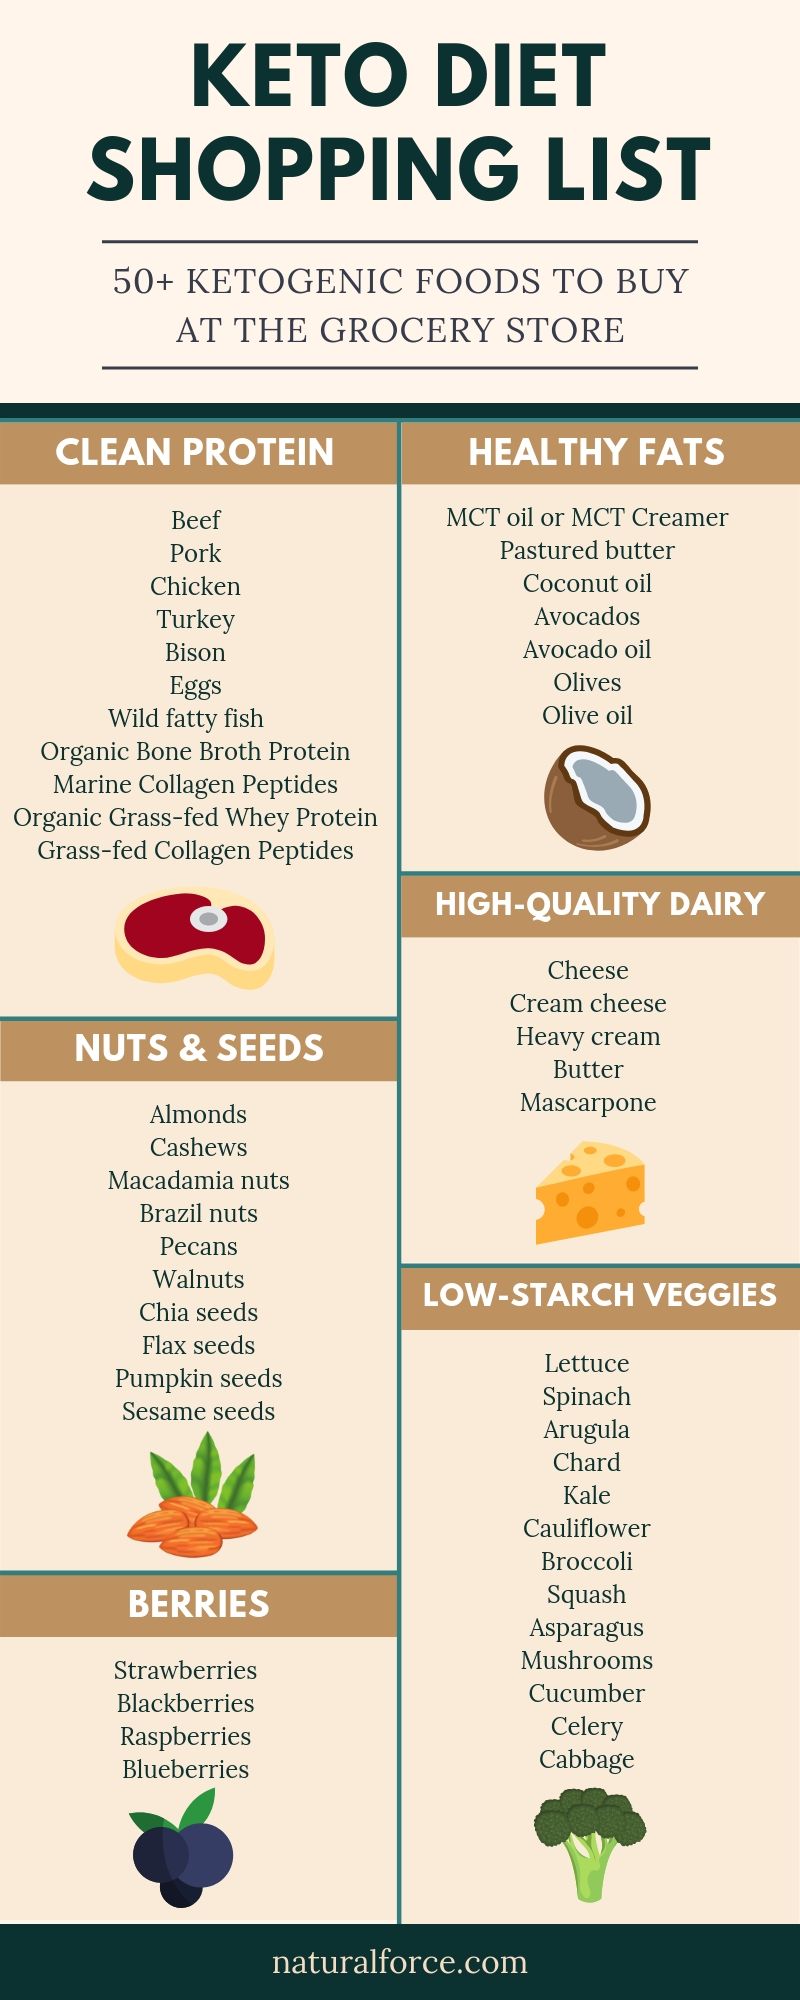 keto diet shopping list infographic